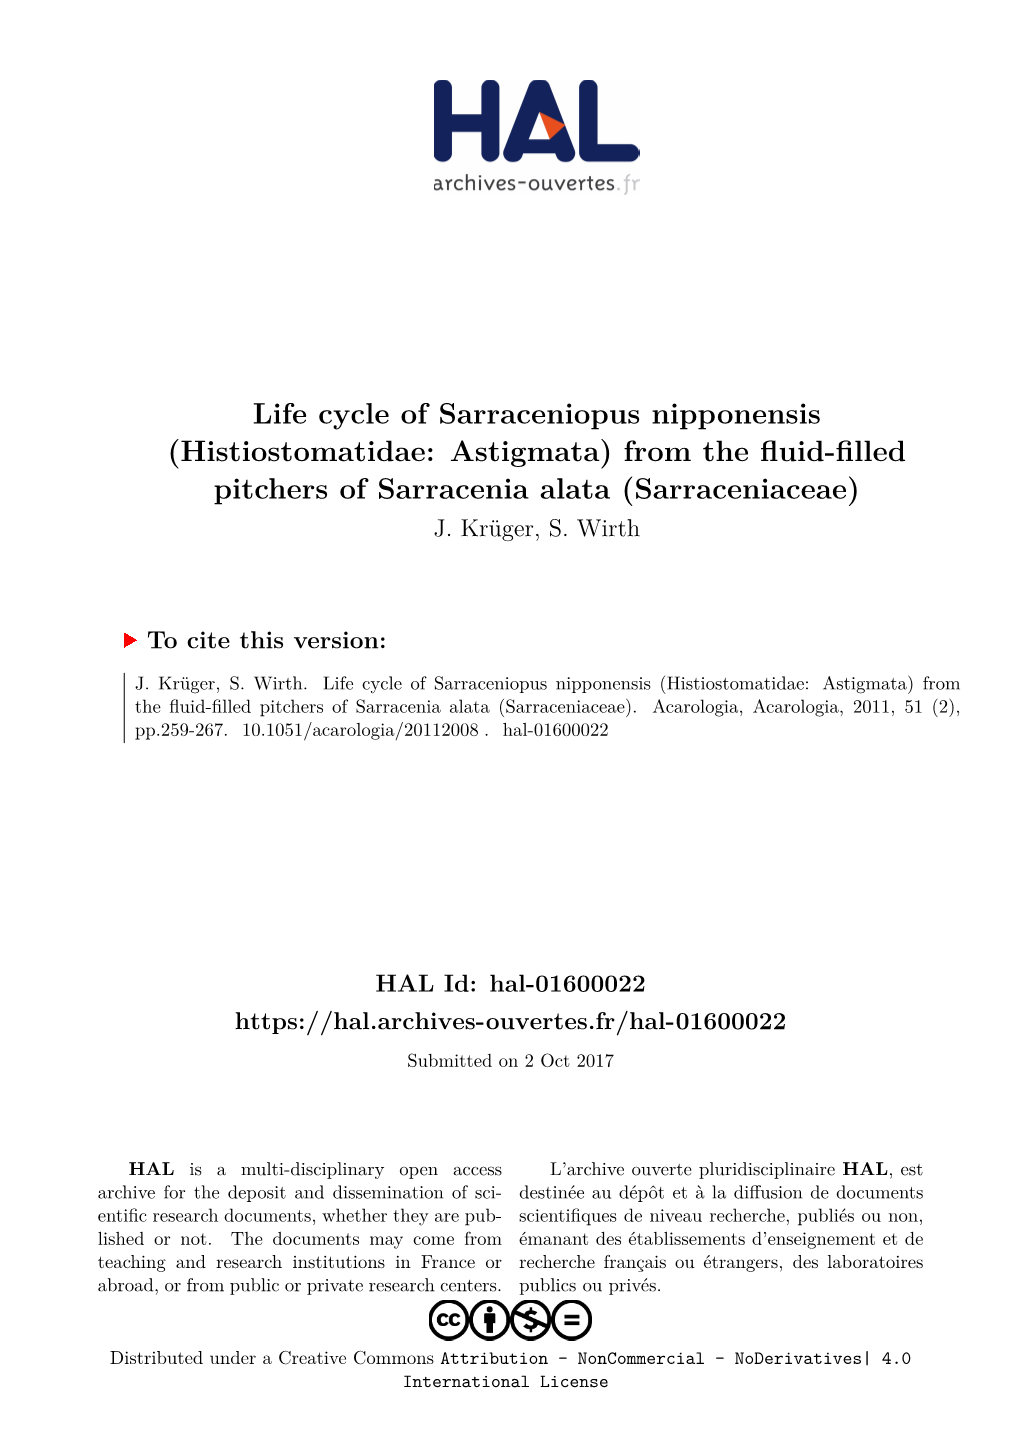 Life Cycle of Sarraceniopus Nipponensis (Histiostomatidae: Astigmata) from the Fluid-Filled Pitchers of Sarracenia Alata (Sarraceniaceae) J